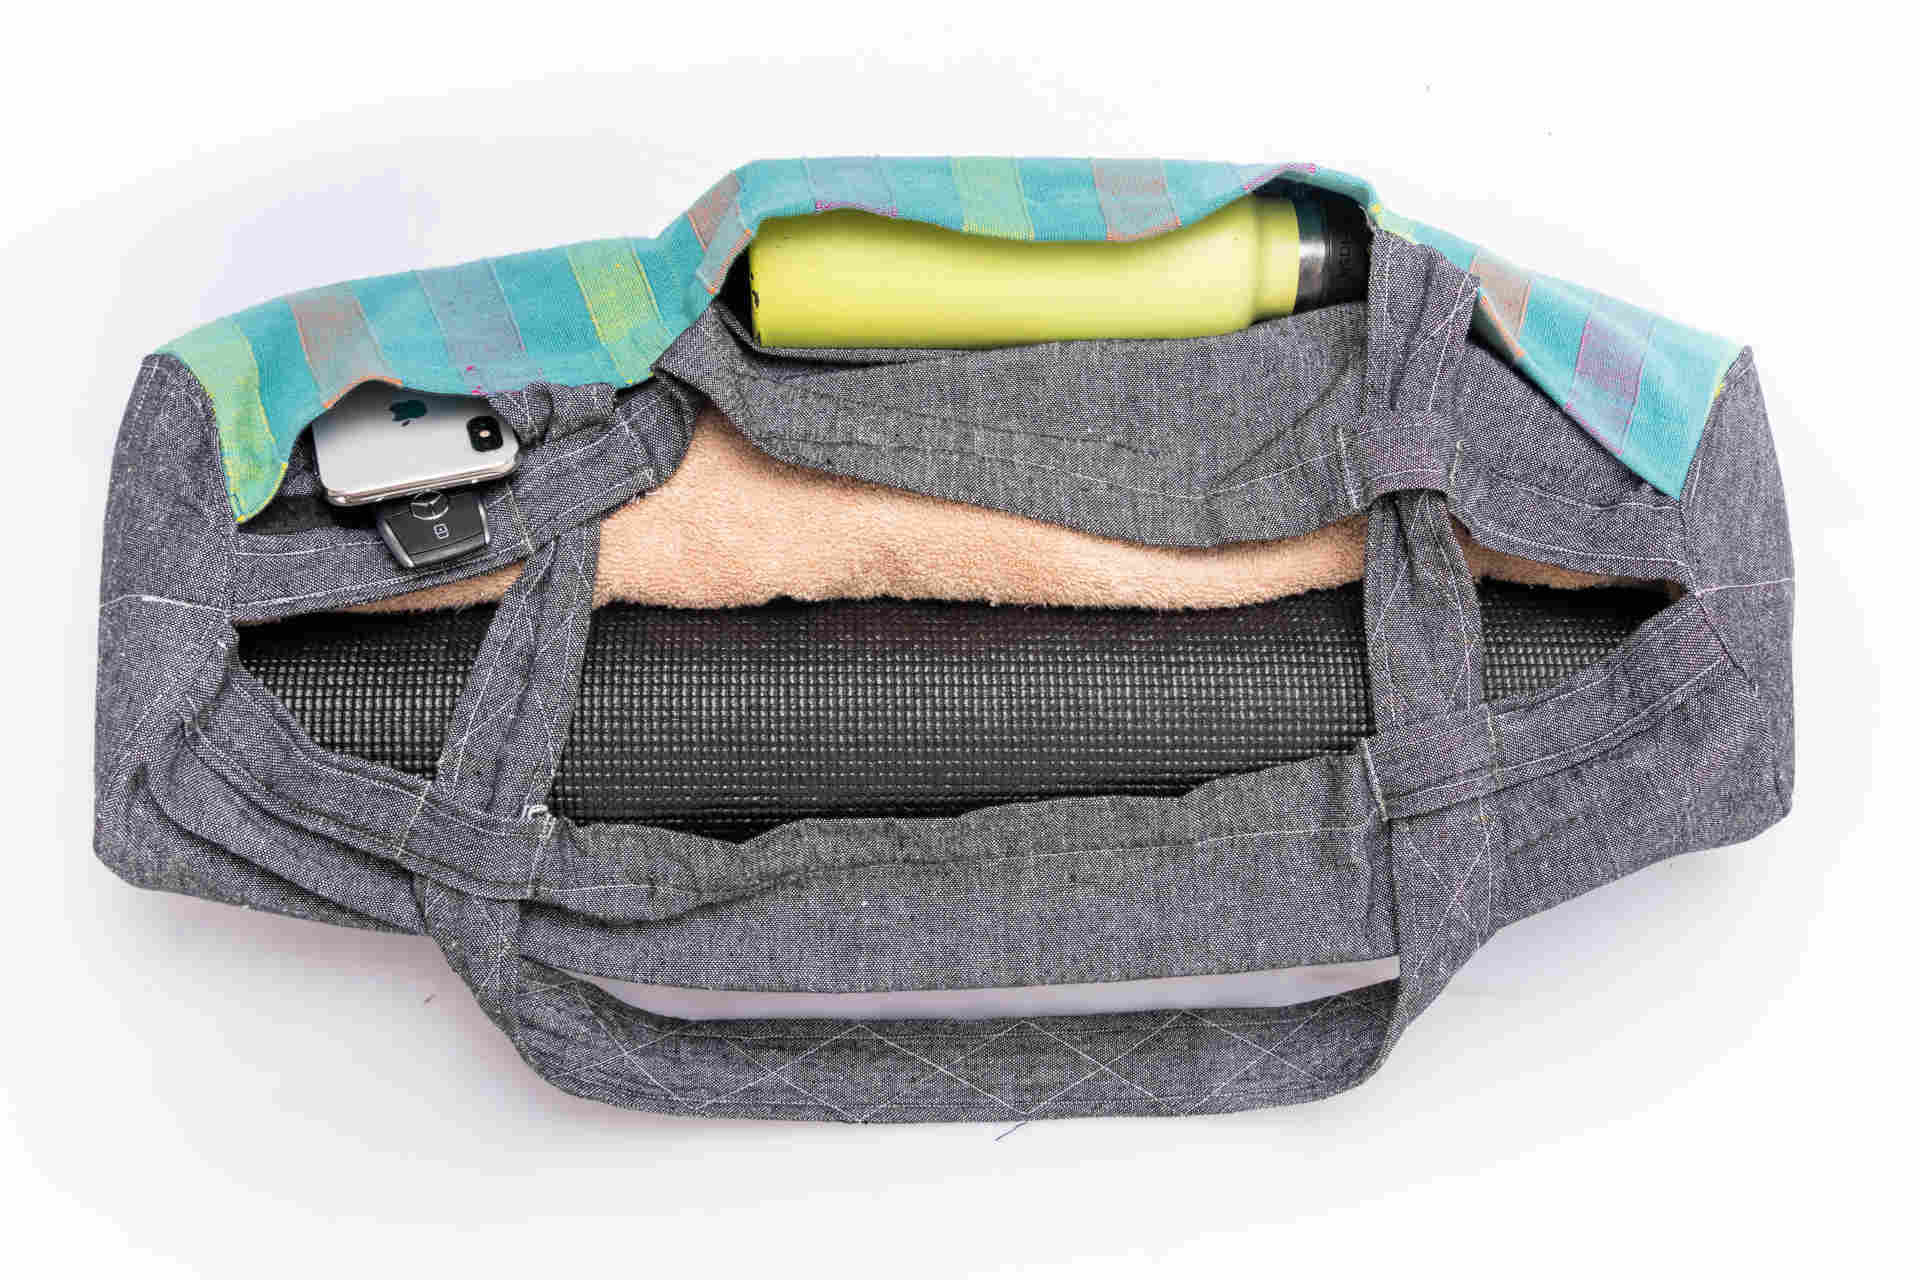 Yoga Mat Bag from Old Pants - Make